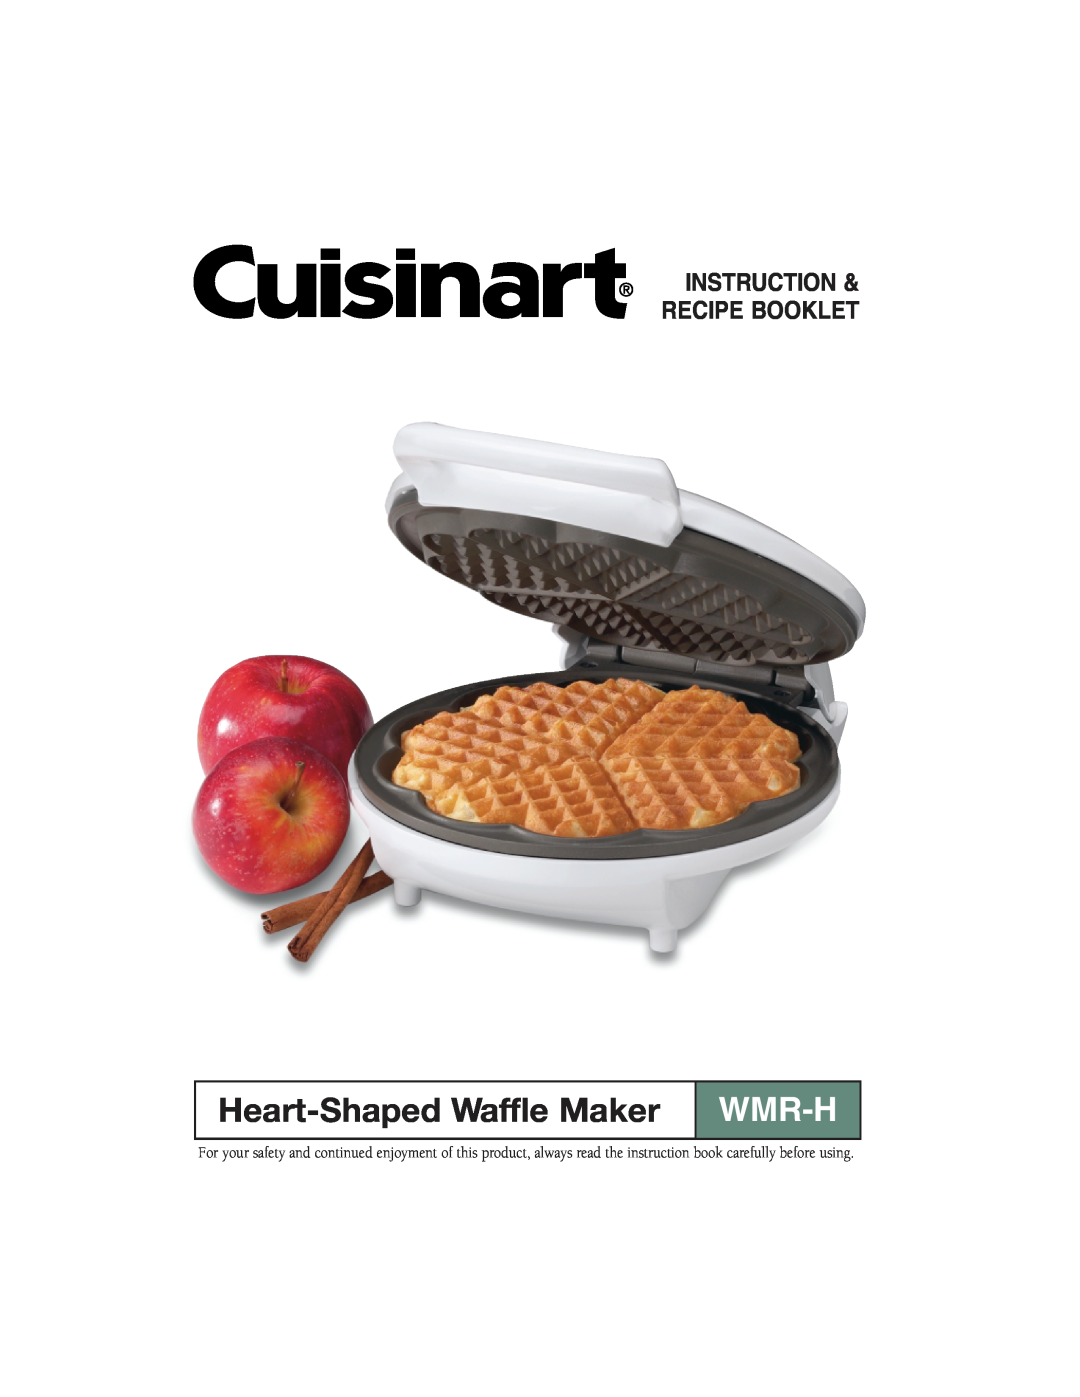 Cuisinart WMR-H manual Heart-Shaped Waffle Maker, Wmr-H, Instruction & Recipe Booklet 